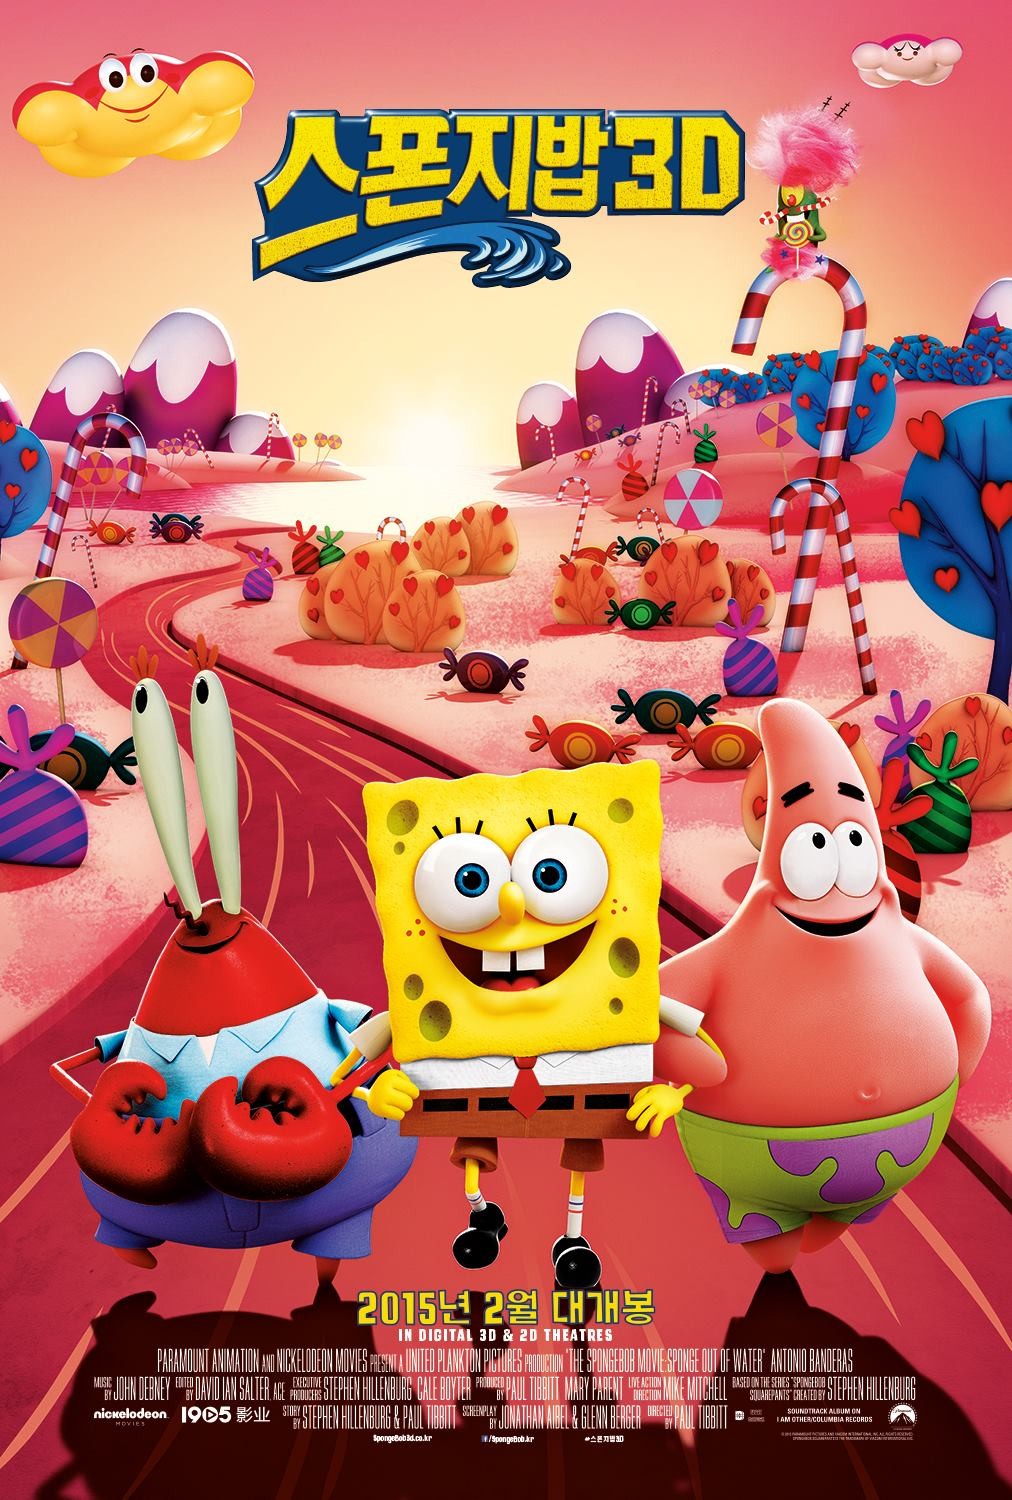 Extra Large Movie Poster Image for SpongeBob SquarePants 2 (#23 of 33)